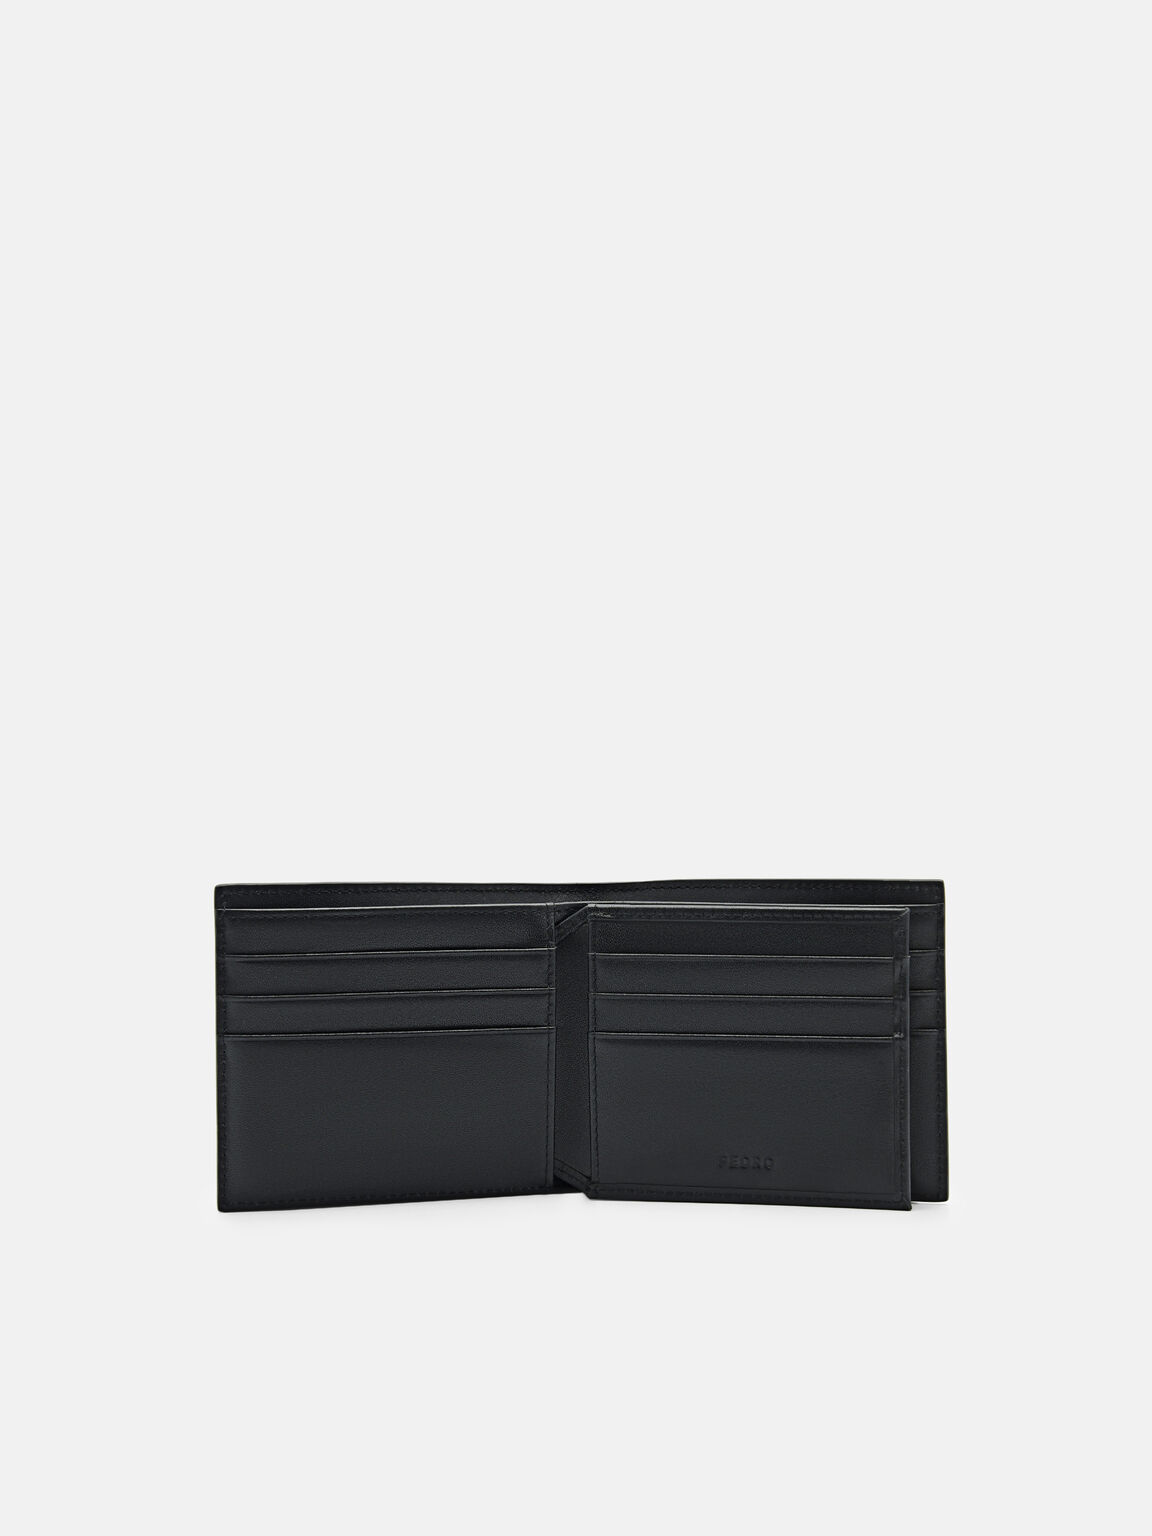 Textured Leather Wallet, Black, hi-res